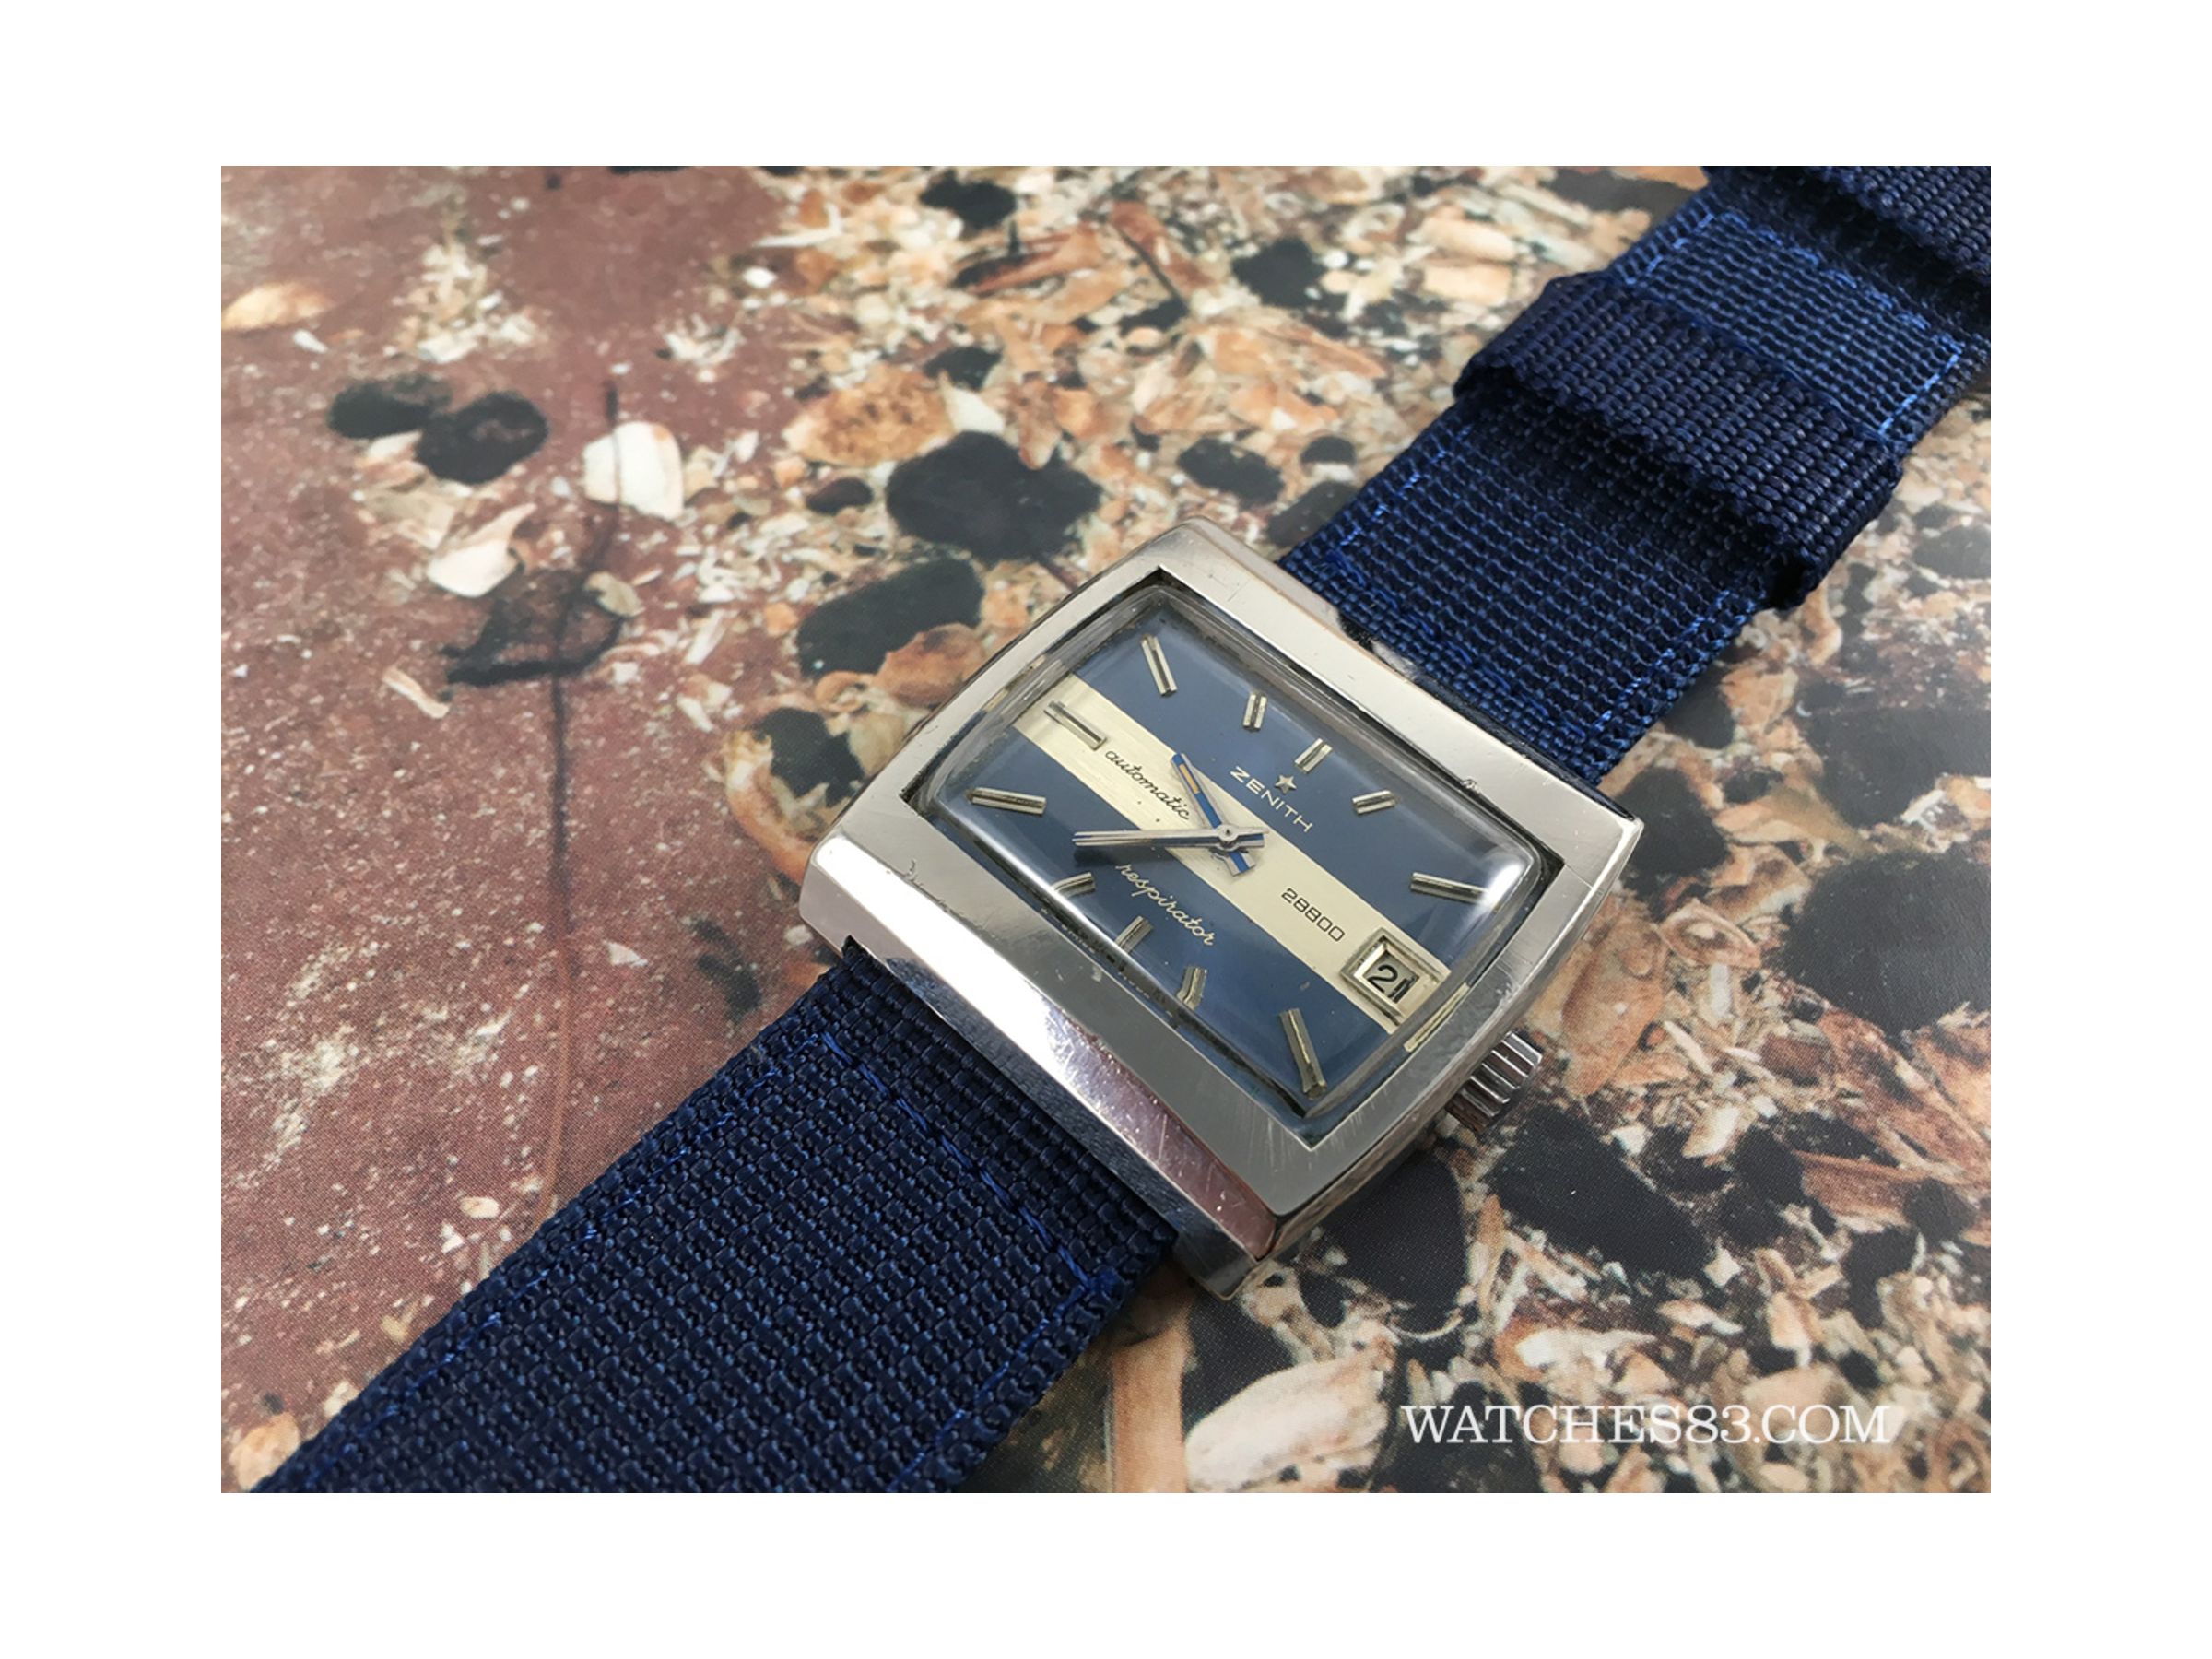 Vintage swiss automatic watch Zenith Respirator 28800 Blue - Watches83